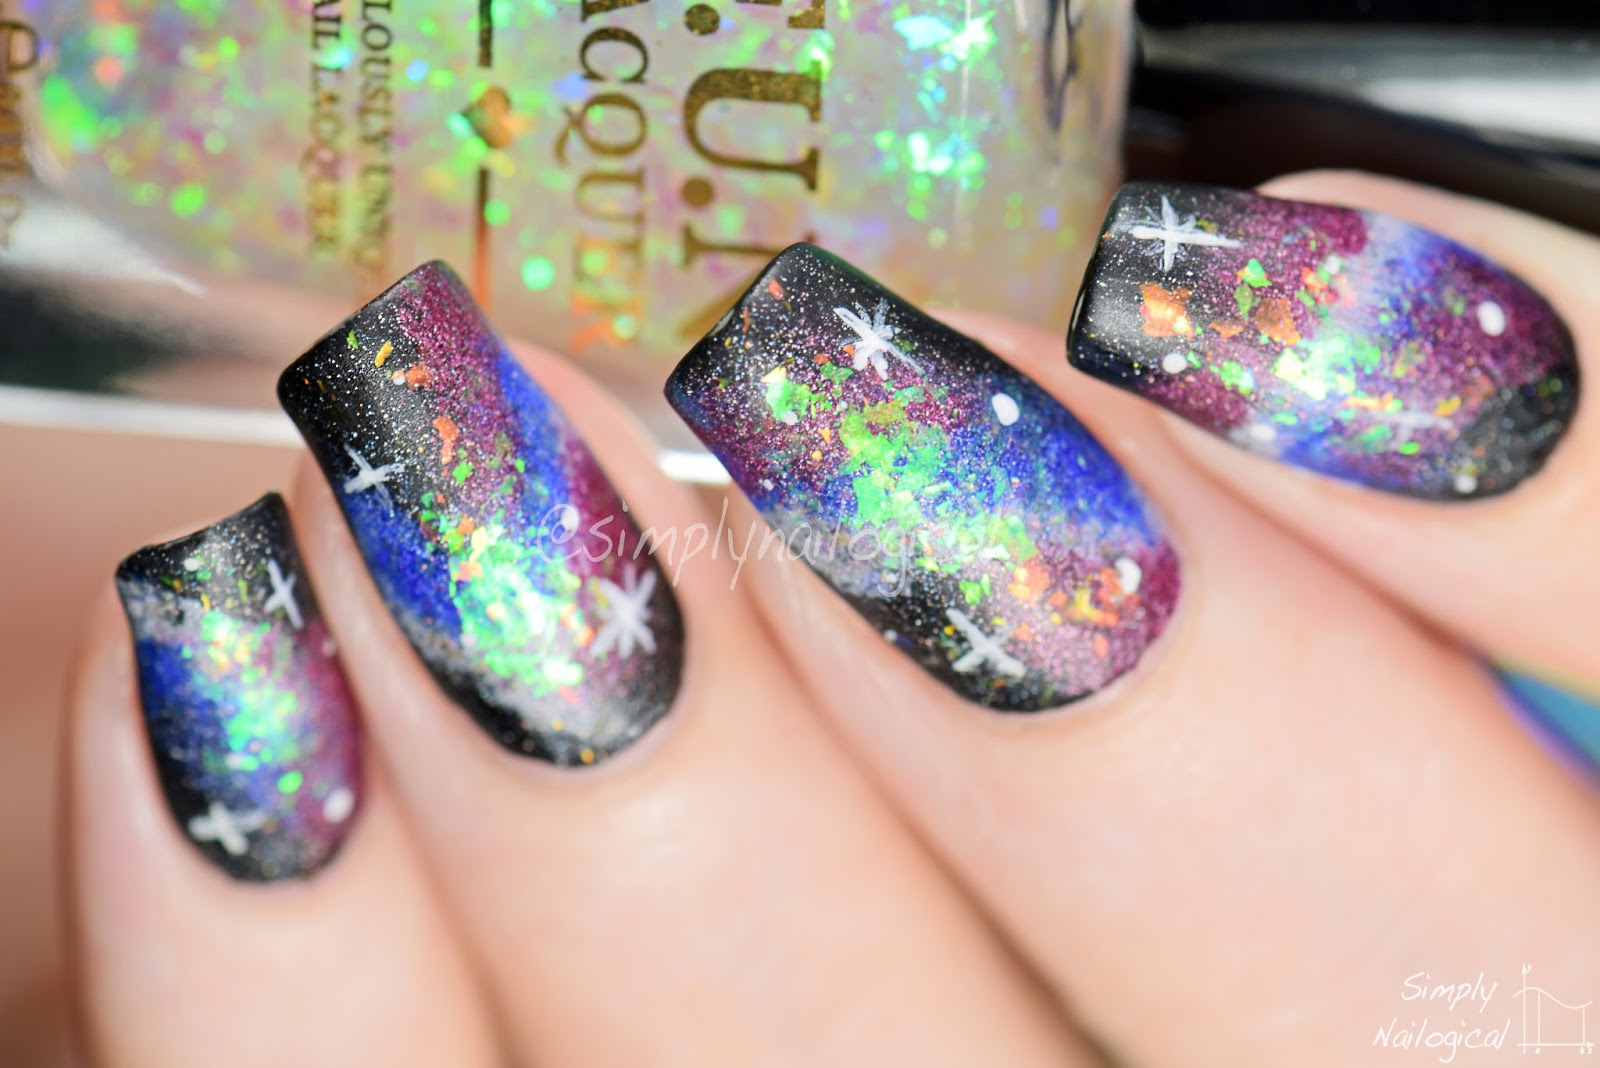 Simply Nailogical: Galaxy nail art with holo and flakies